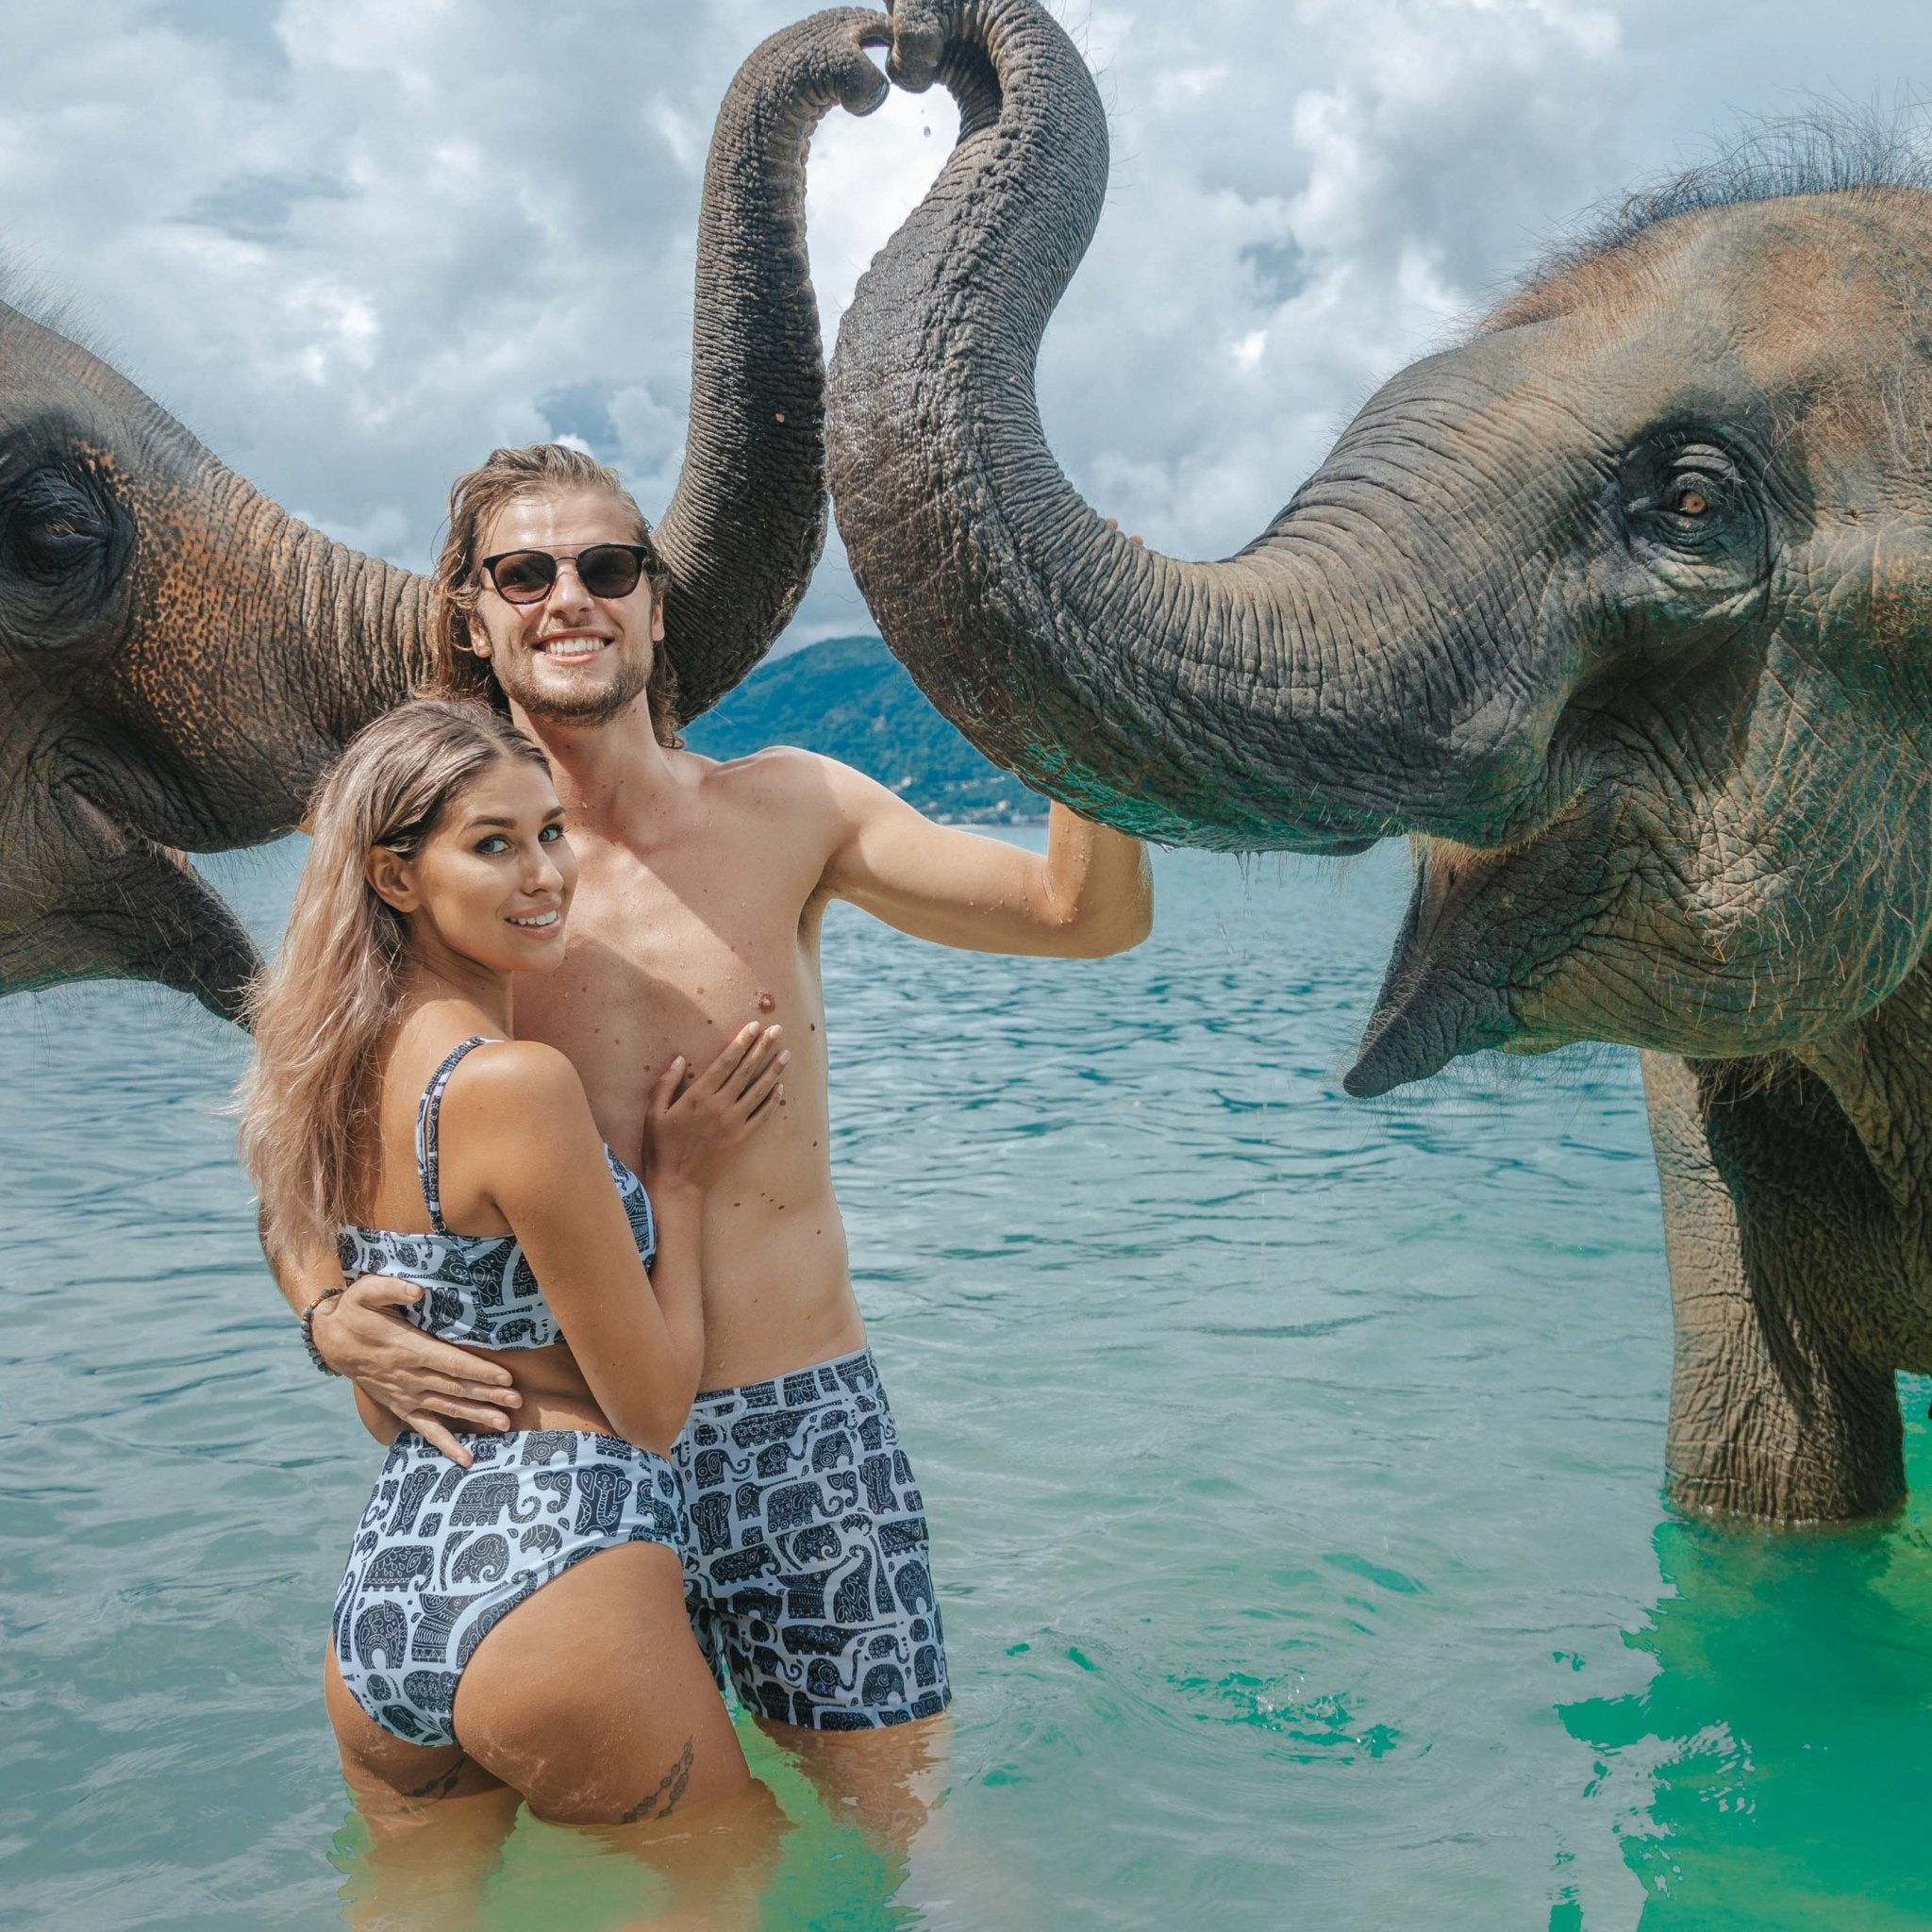 MALAWI SWIM TRUNKS Elepanta Swim Trunks - Buy Today Elephant Pants Jewelry And Bohemian Clothes Handmade In Thailand Help To Save The Elephants FairTrade And Vegan